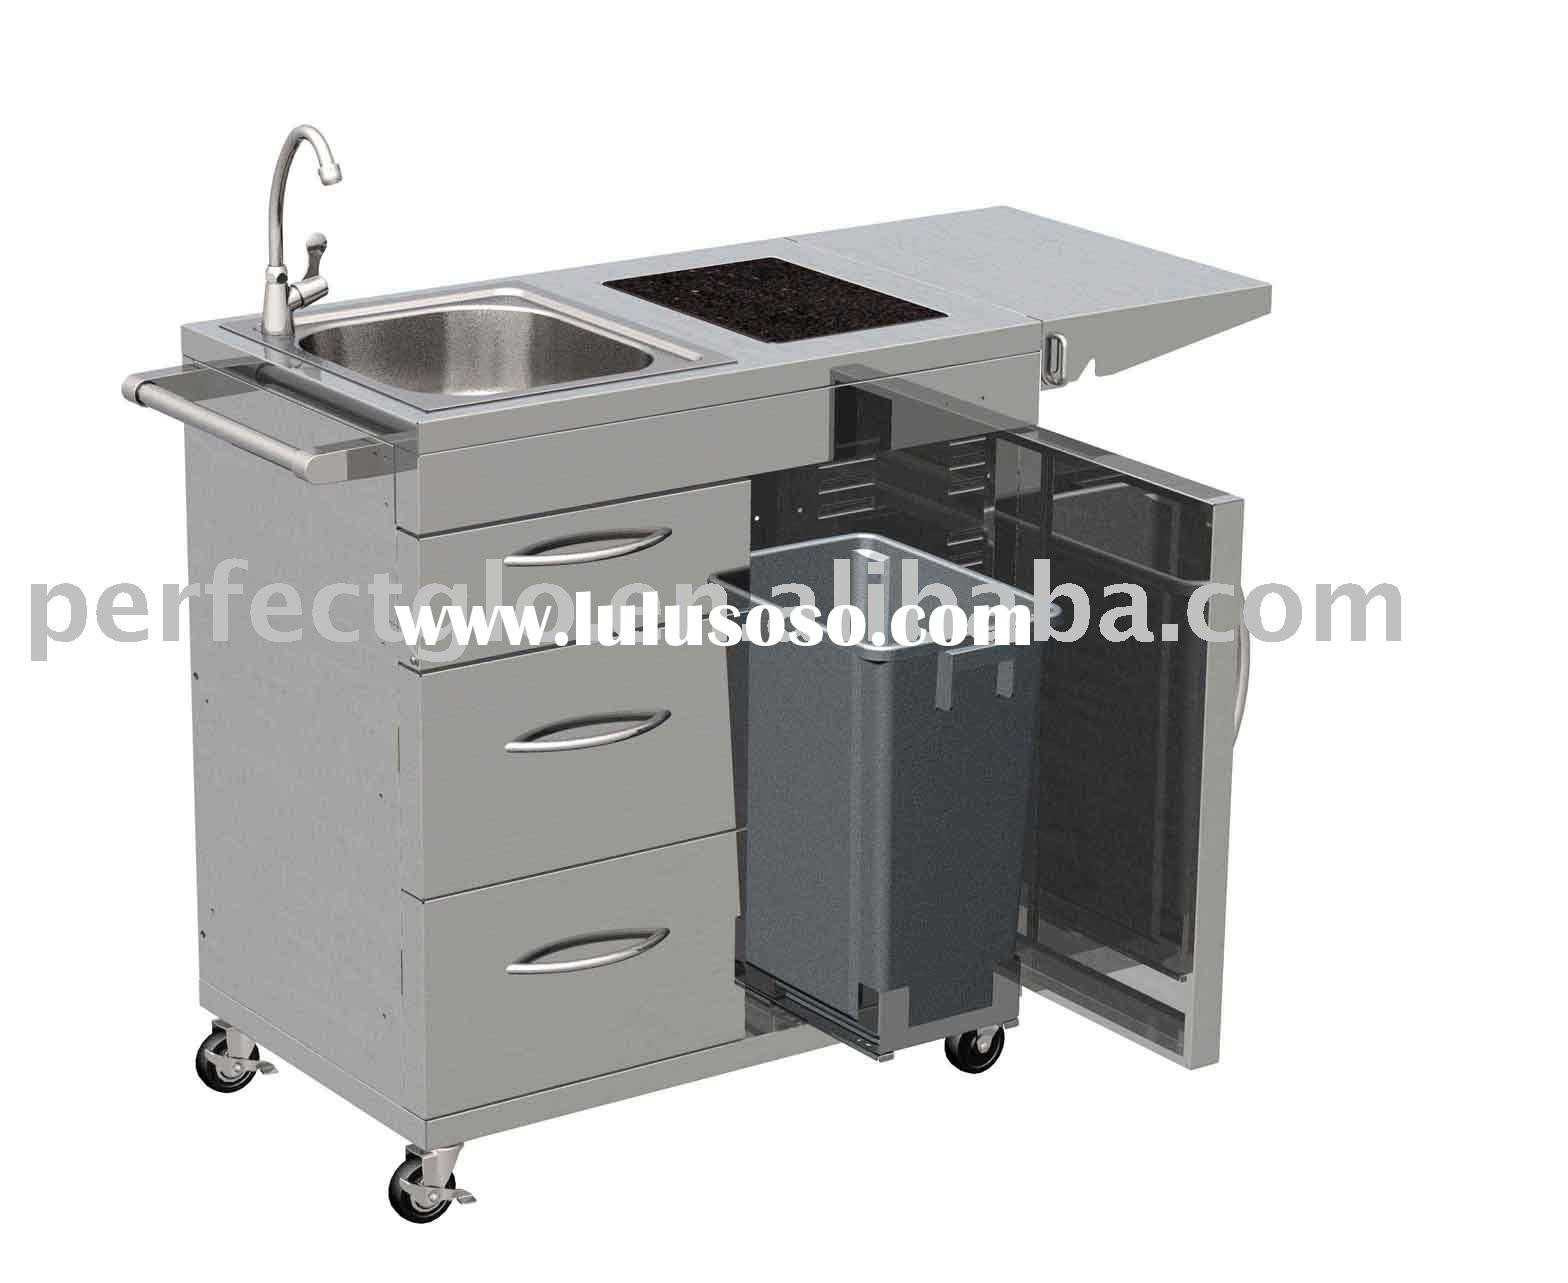 Outdoor Kitchen Sink And Cabinet
 Master Forge Burner Modular Outdoor Kitchen Sink Side